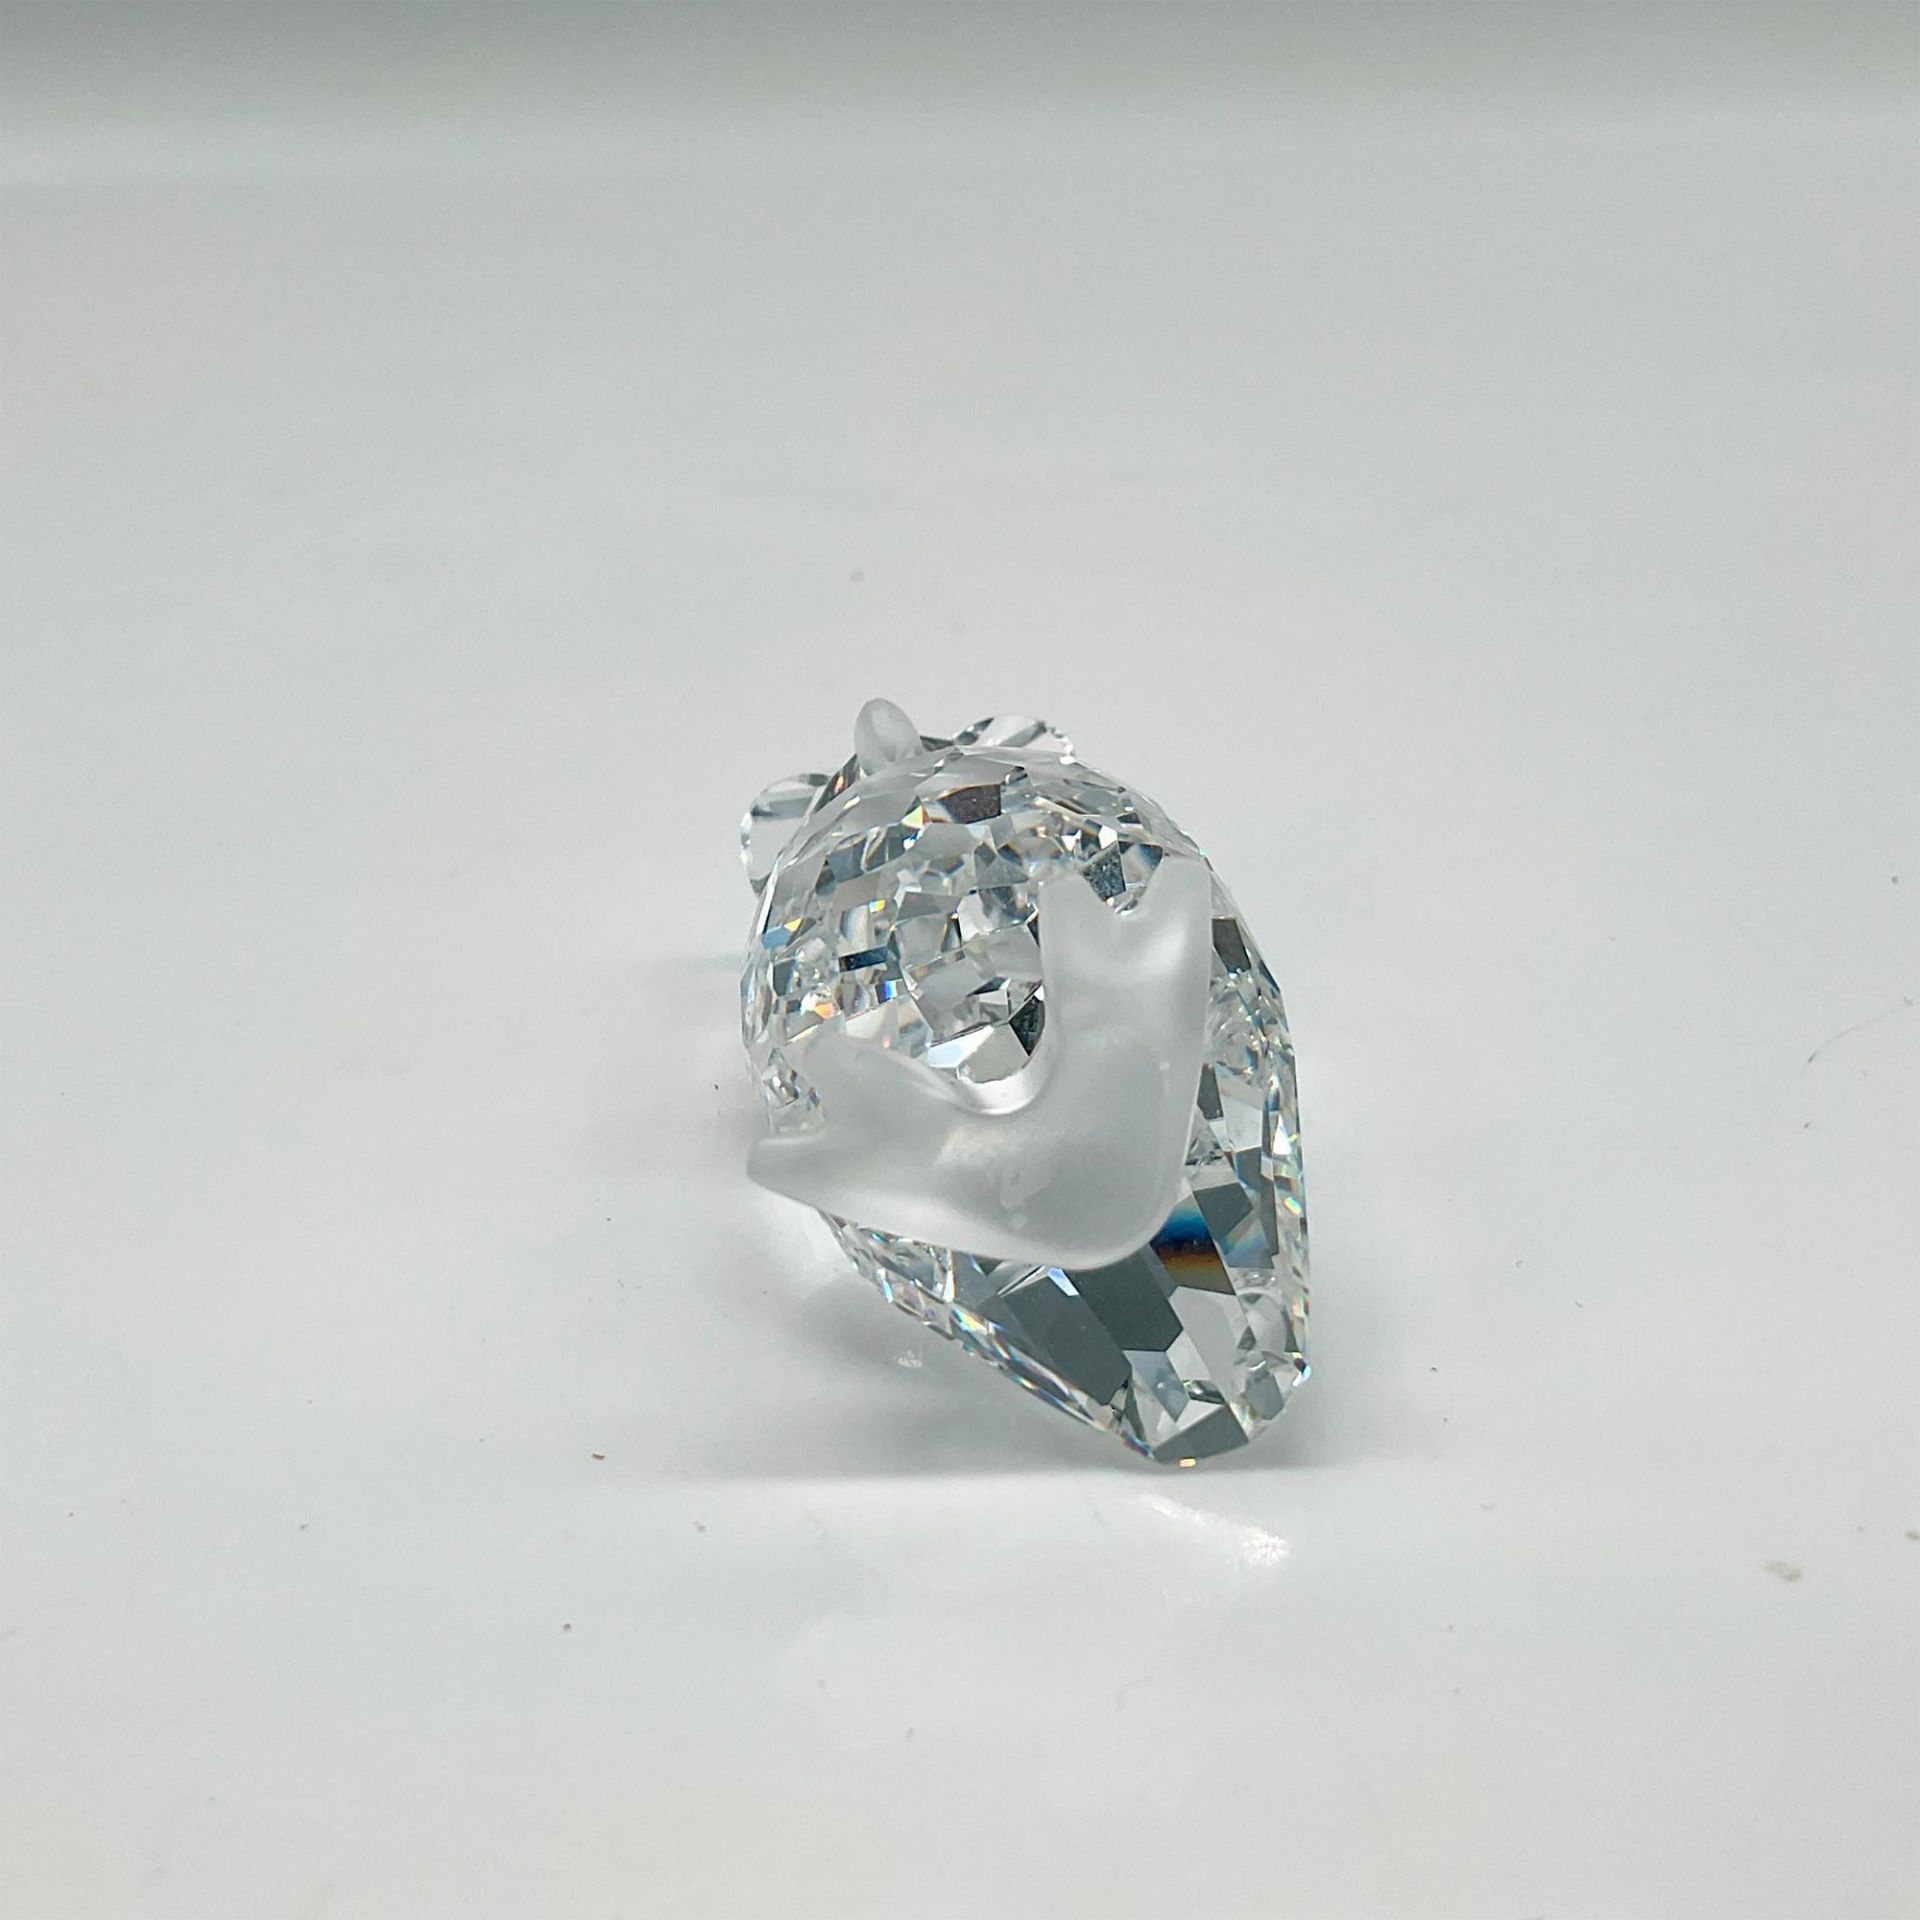 Swarovski Silver Crystal Figurine, Night Owl - Image 3 of 4